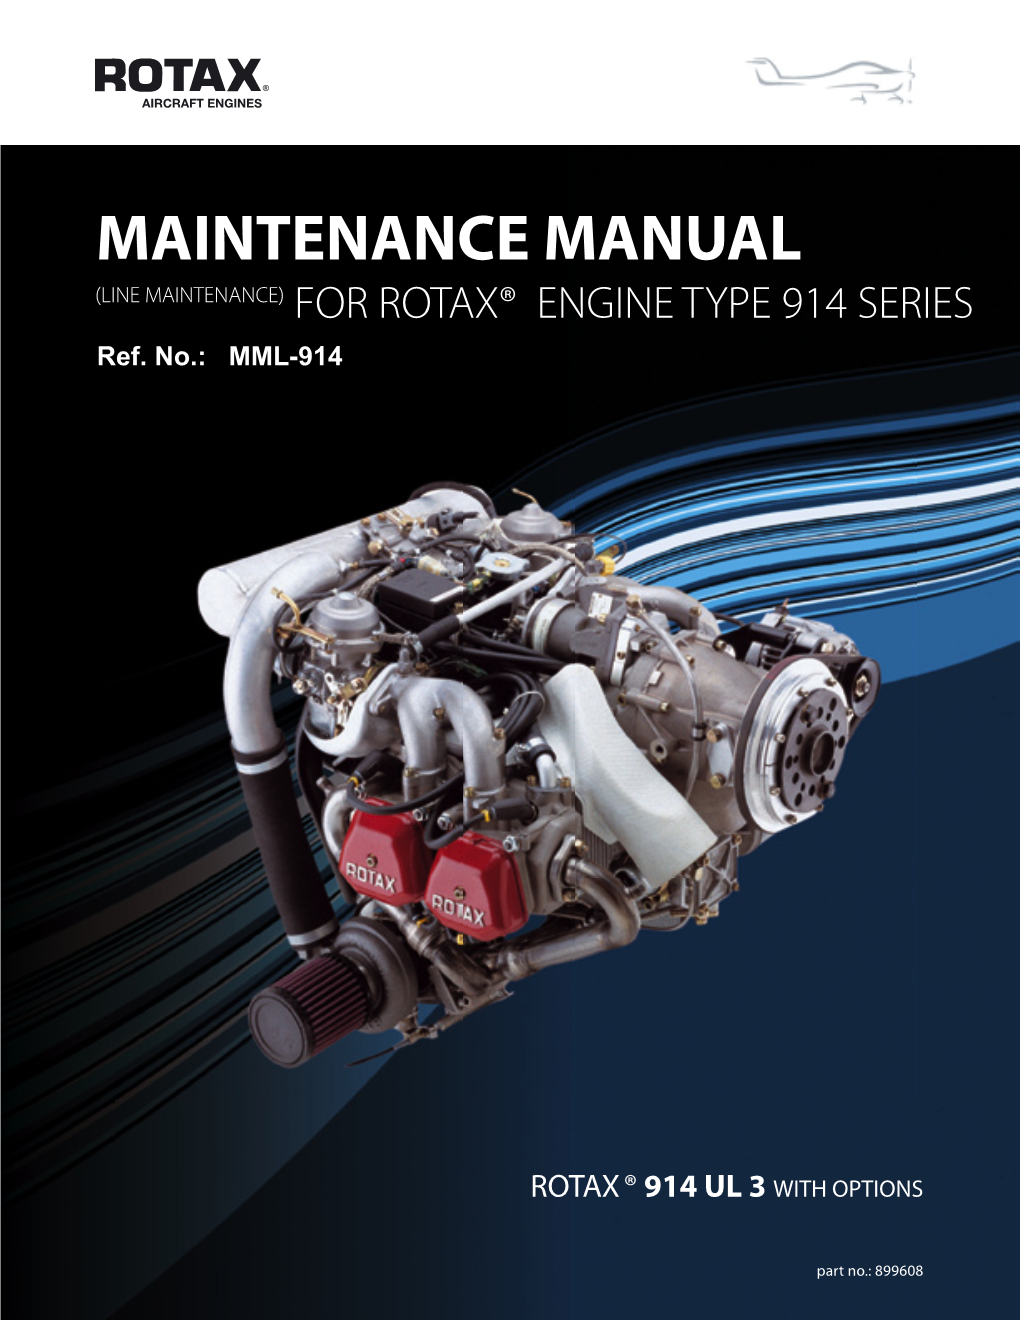 Maintenance Manual (Line Maintenance) for Rotax® Engine Type 914 Series